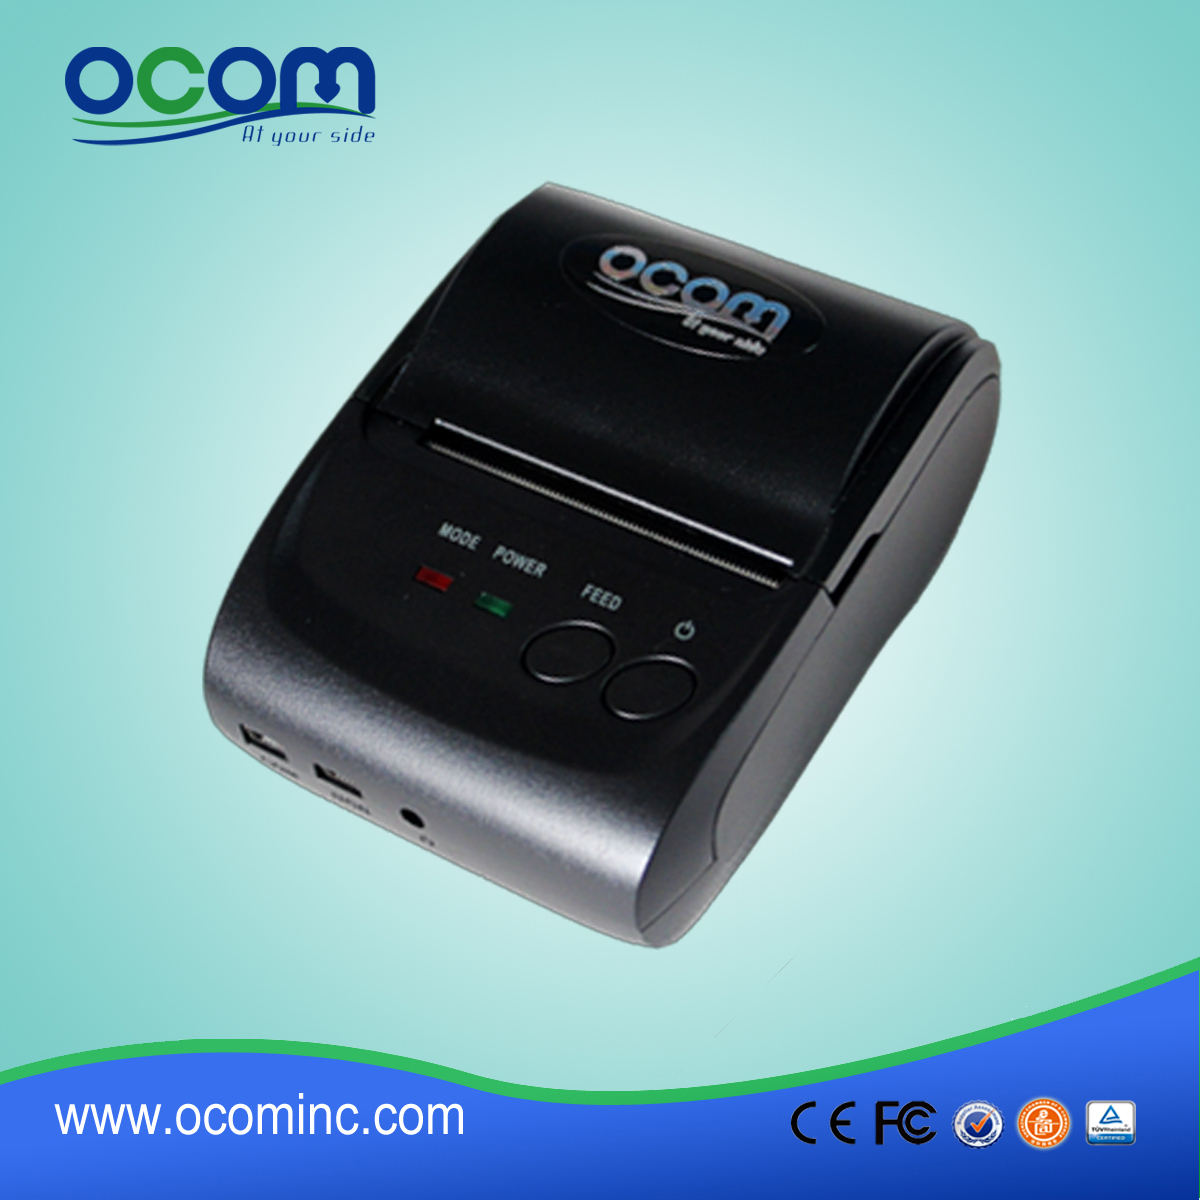 OCPP-M05: 2015 impresora de la posición del bluetooth mini impresora caliente, impresora térmica inalámbrica